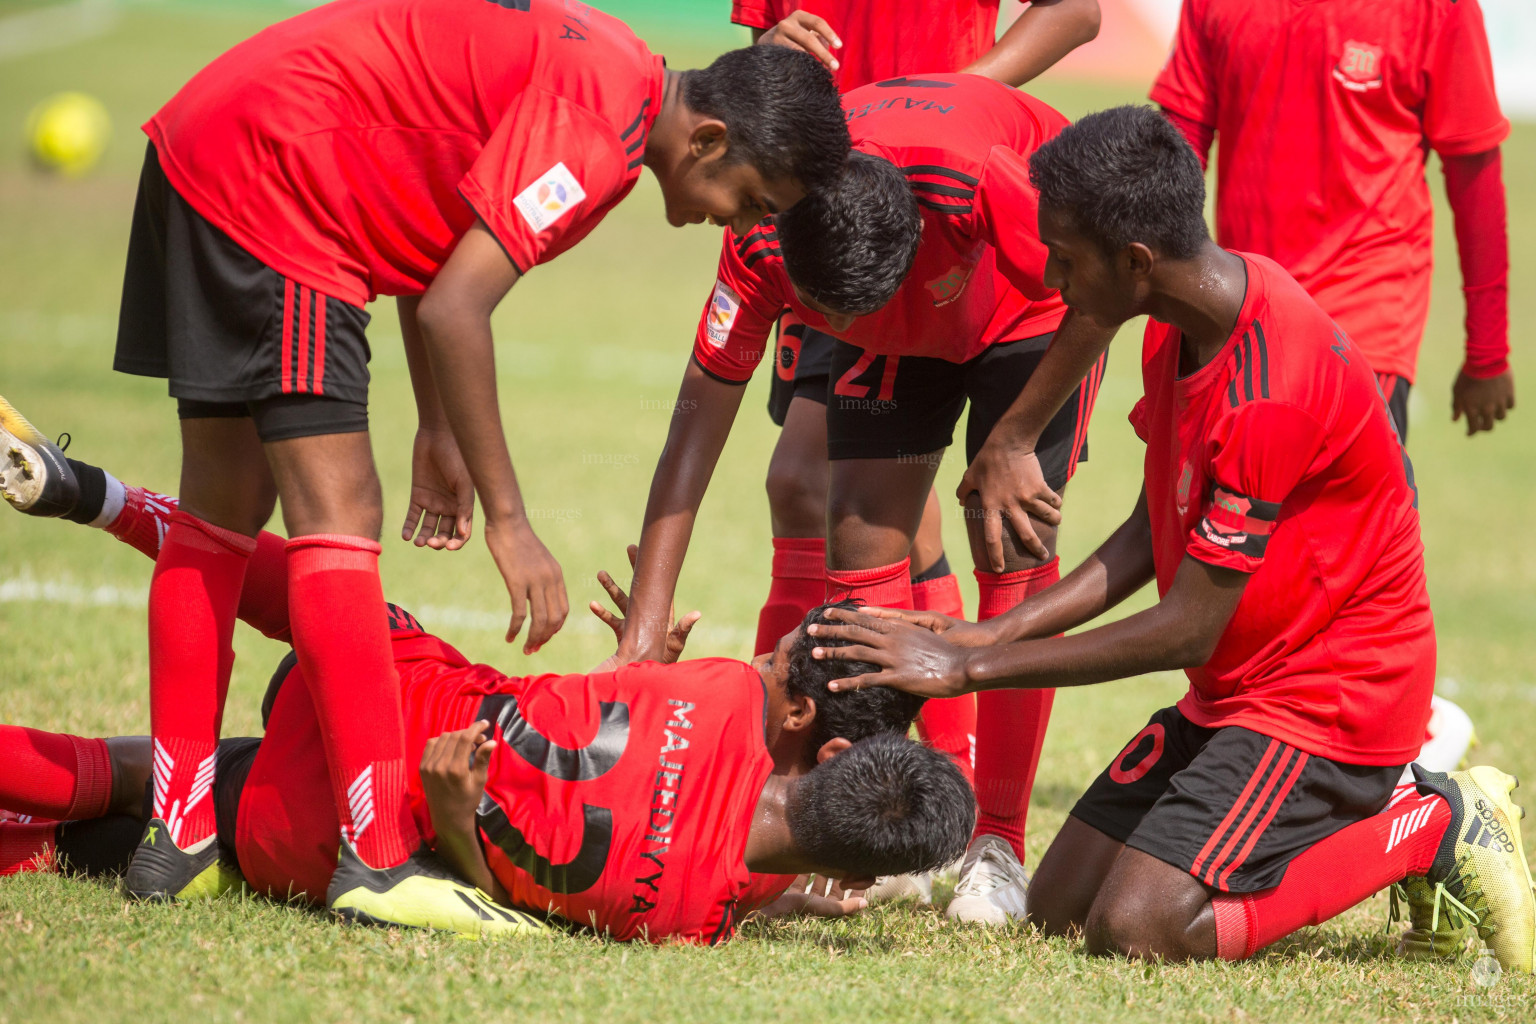 Majeedhiyya School vs Aminiya School in Mamen Inter-School Football Tournament 2019 (U15) on 4th March 2019, Sunday in Male' Maldives (Images.mv Photo: Suadh Abdul Sattar)